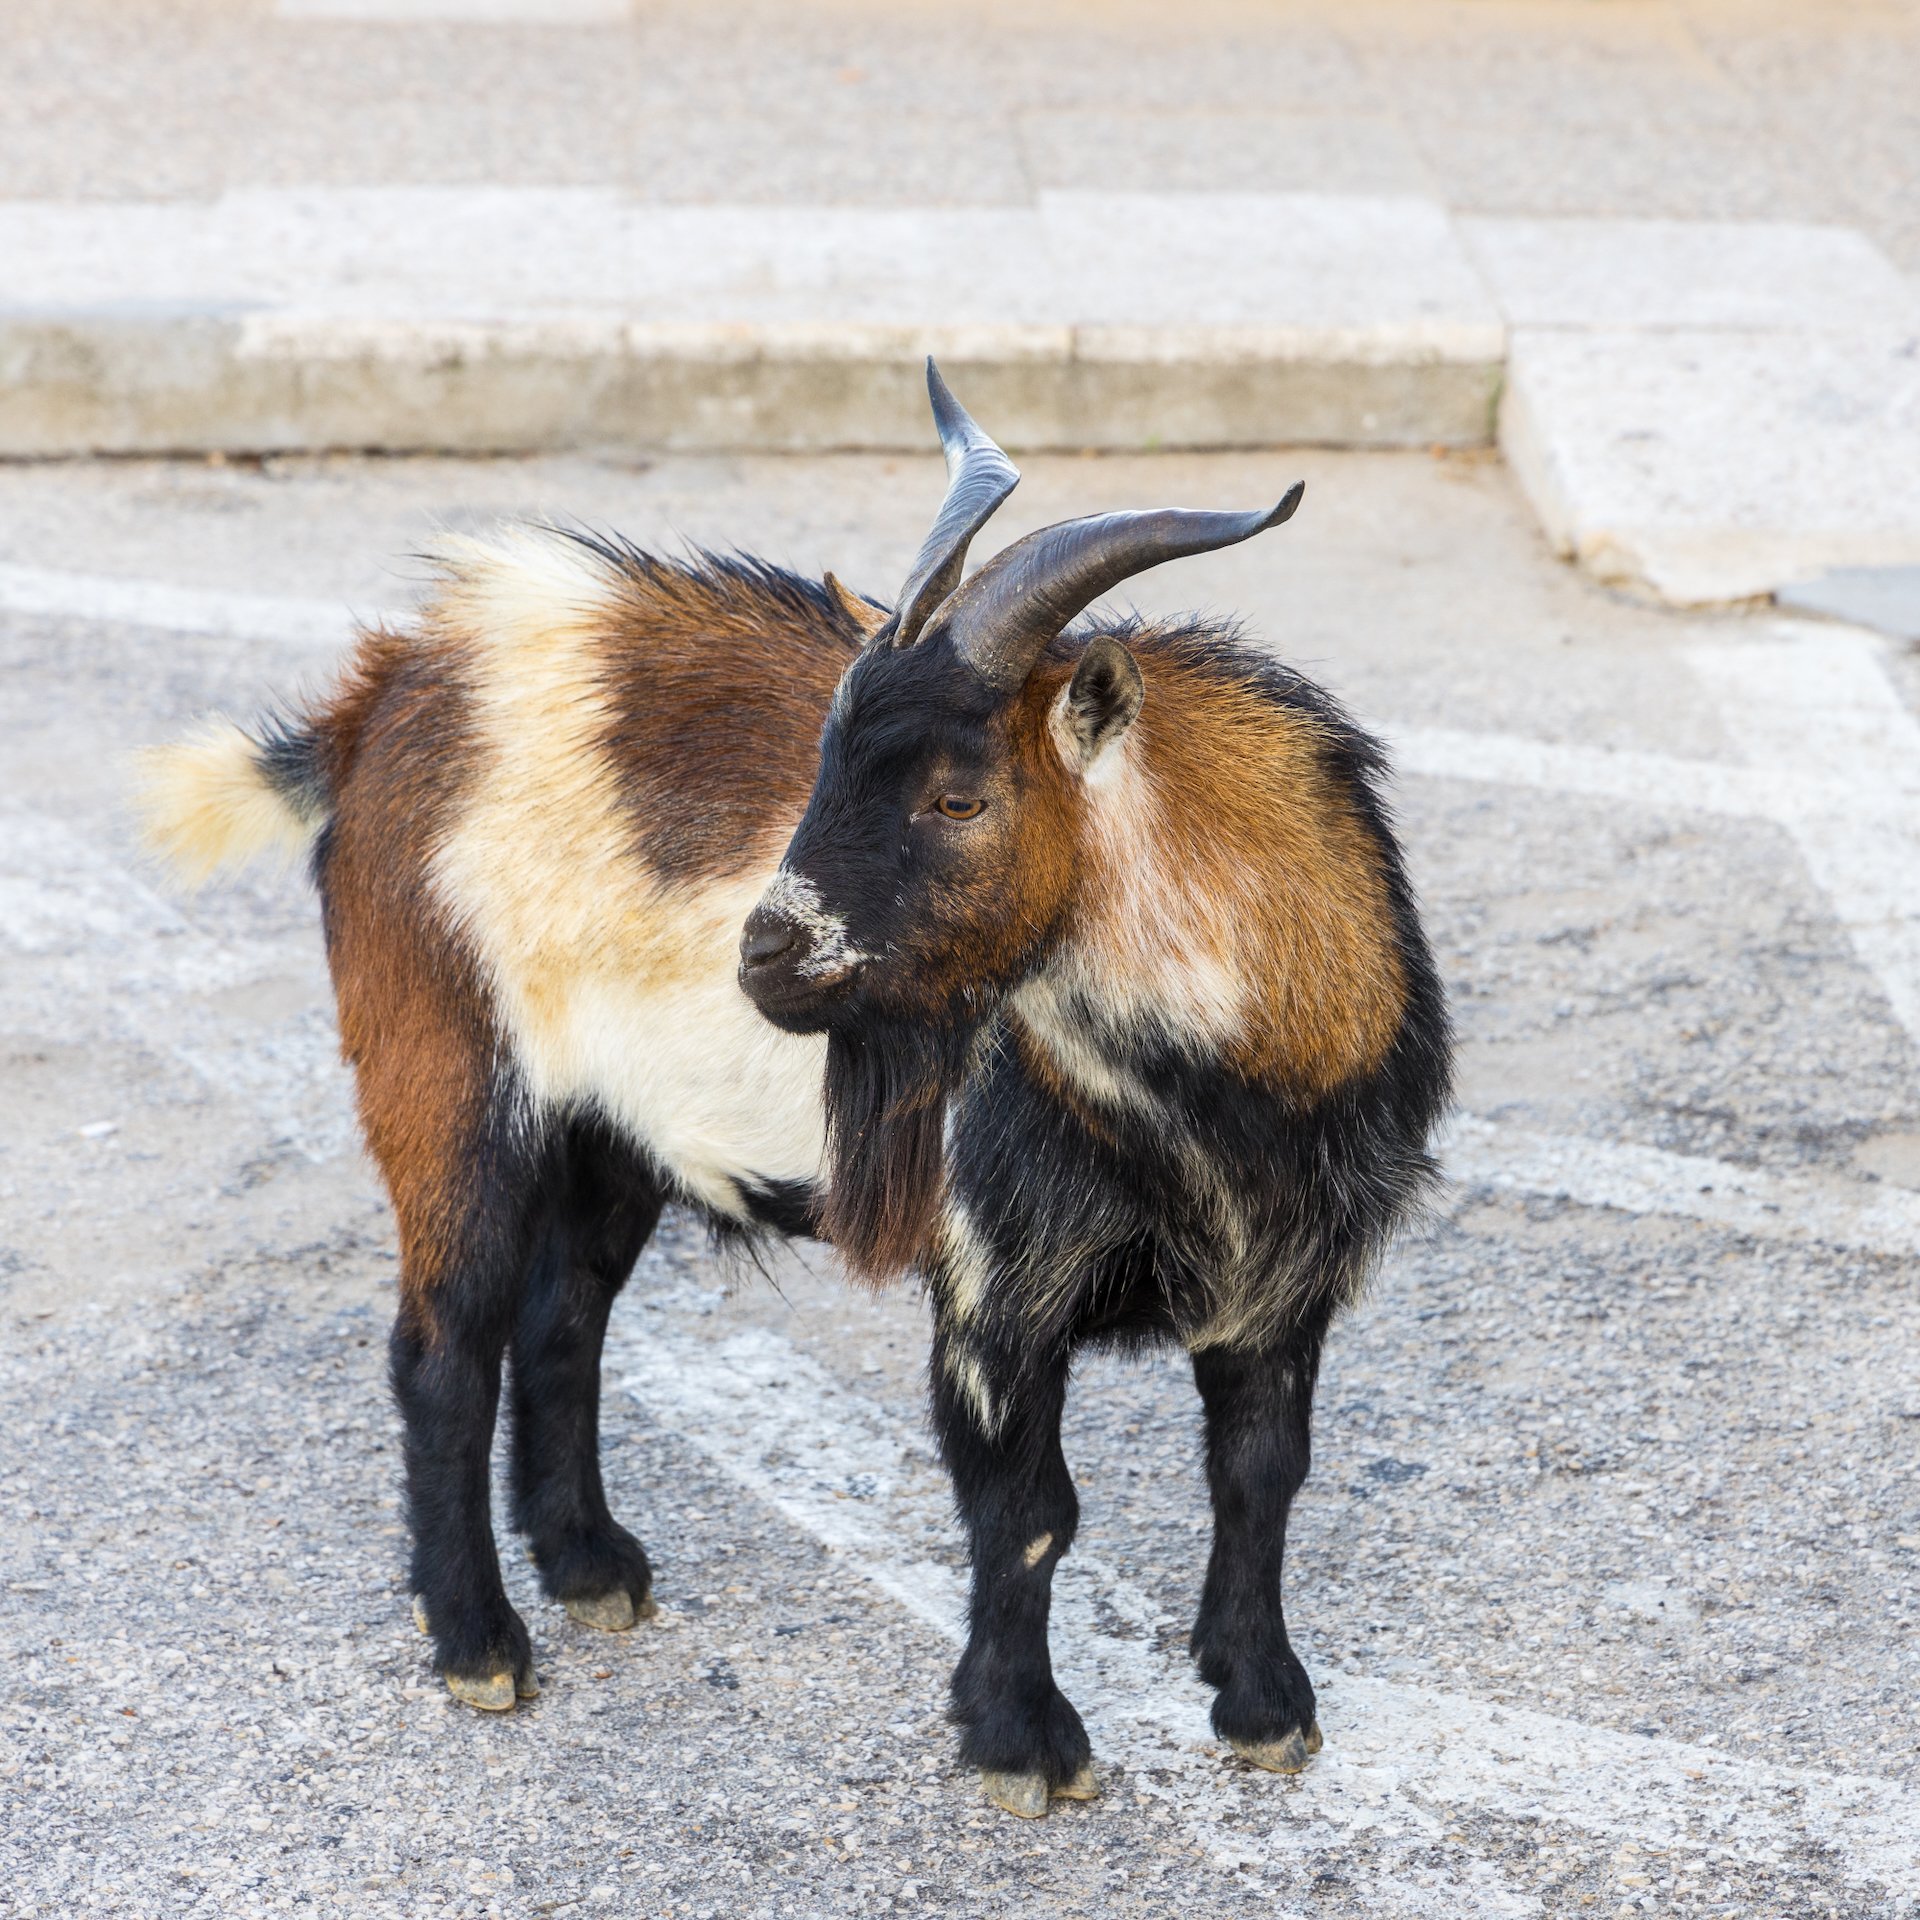  Urban Goats! 